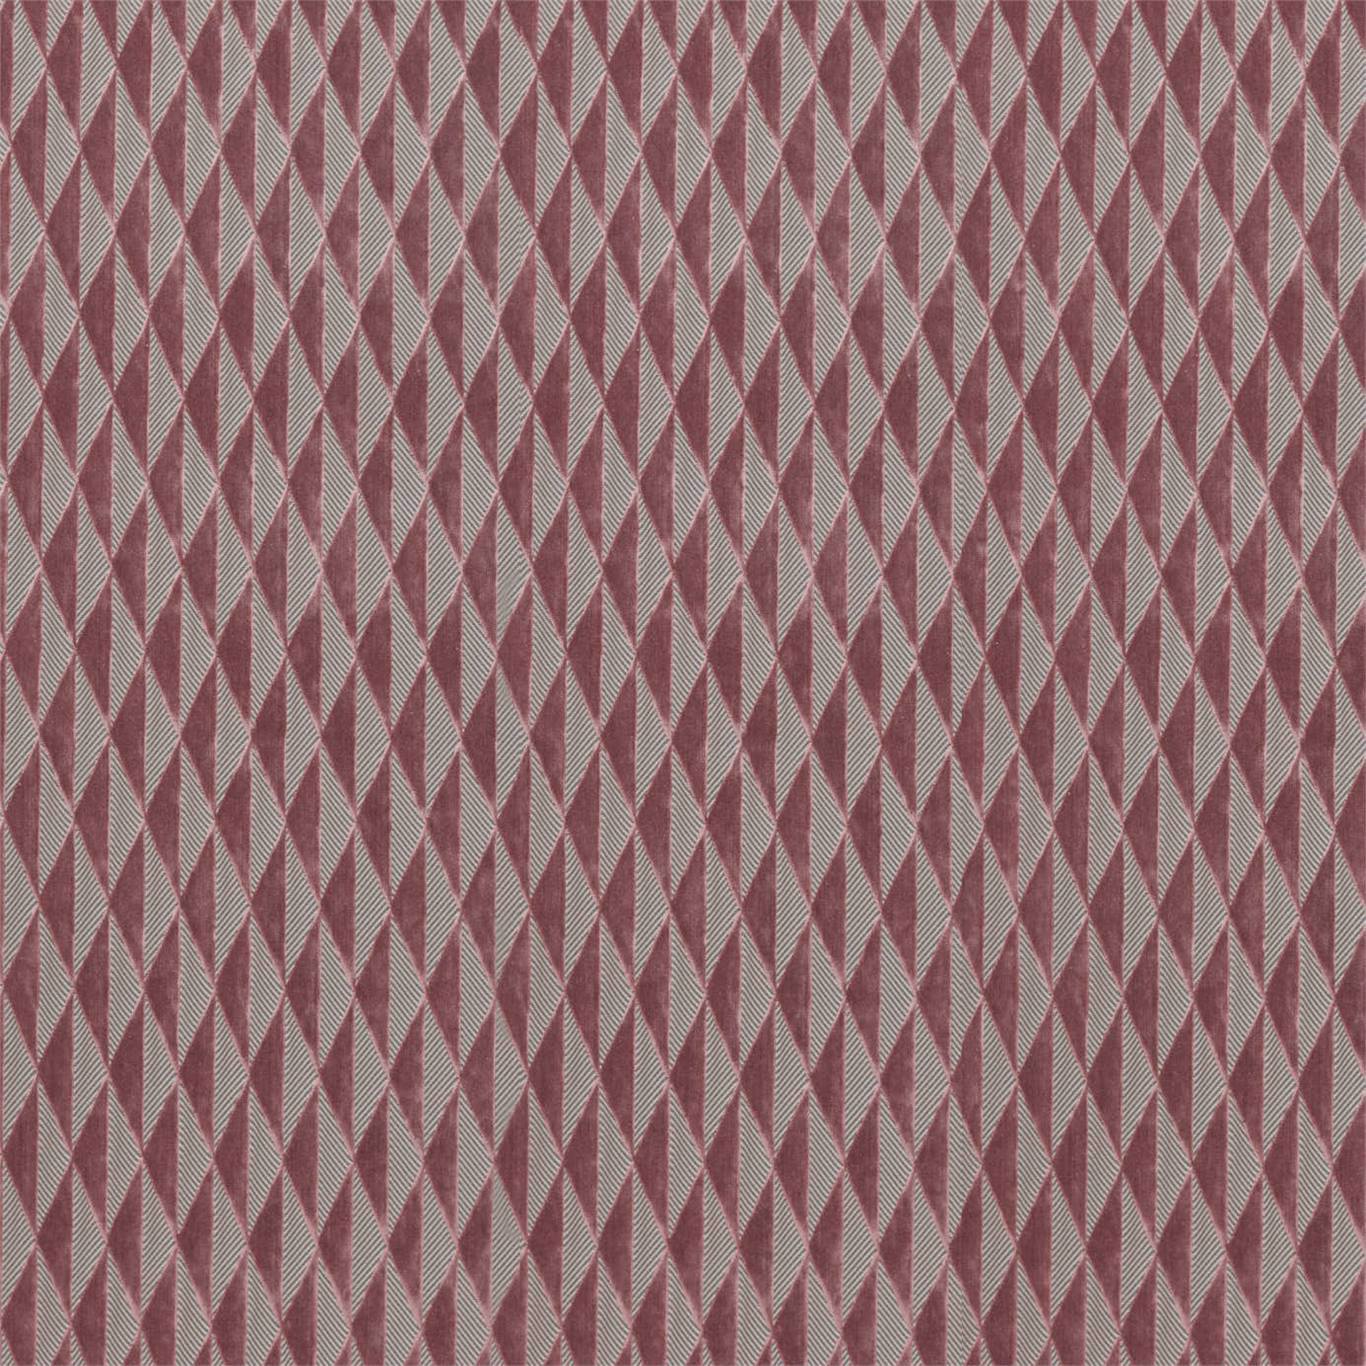 Irradiant Rose Quartz Fabric by HAR